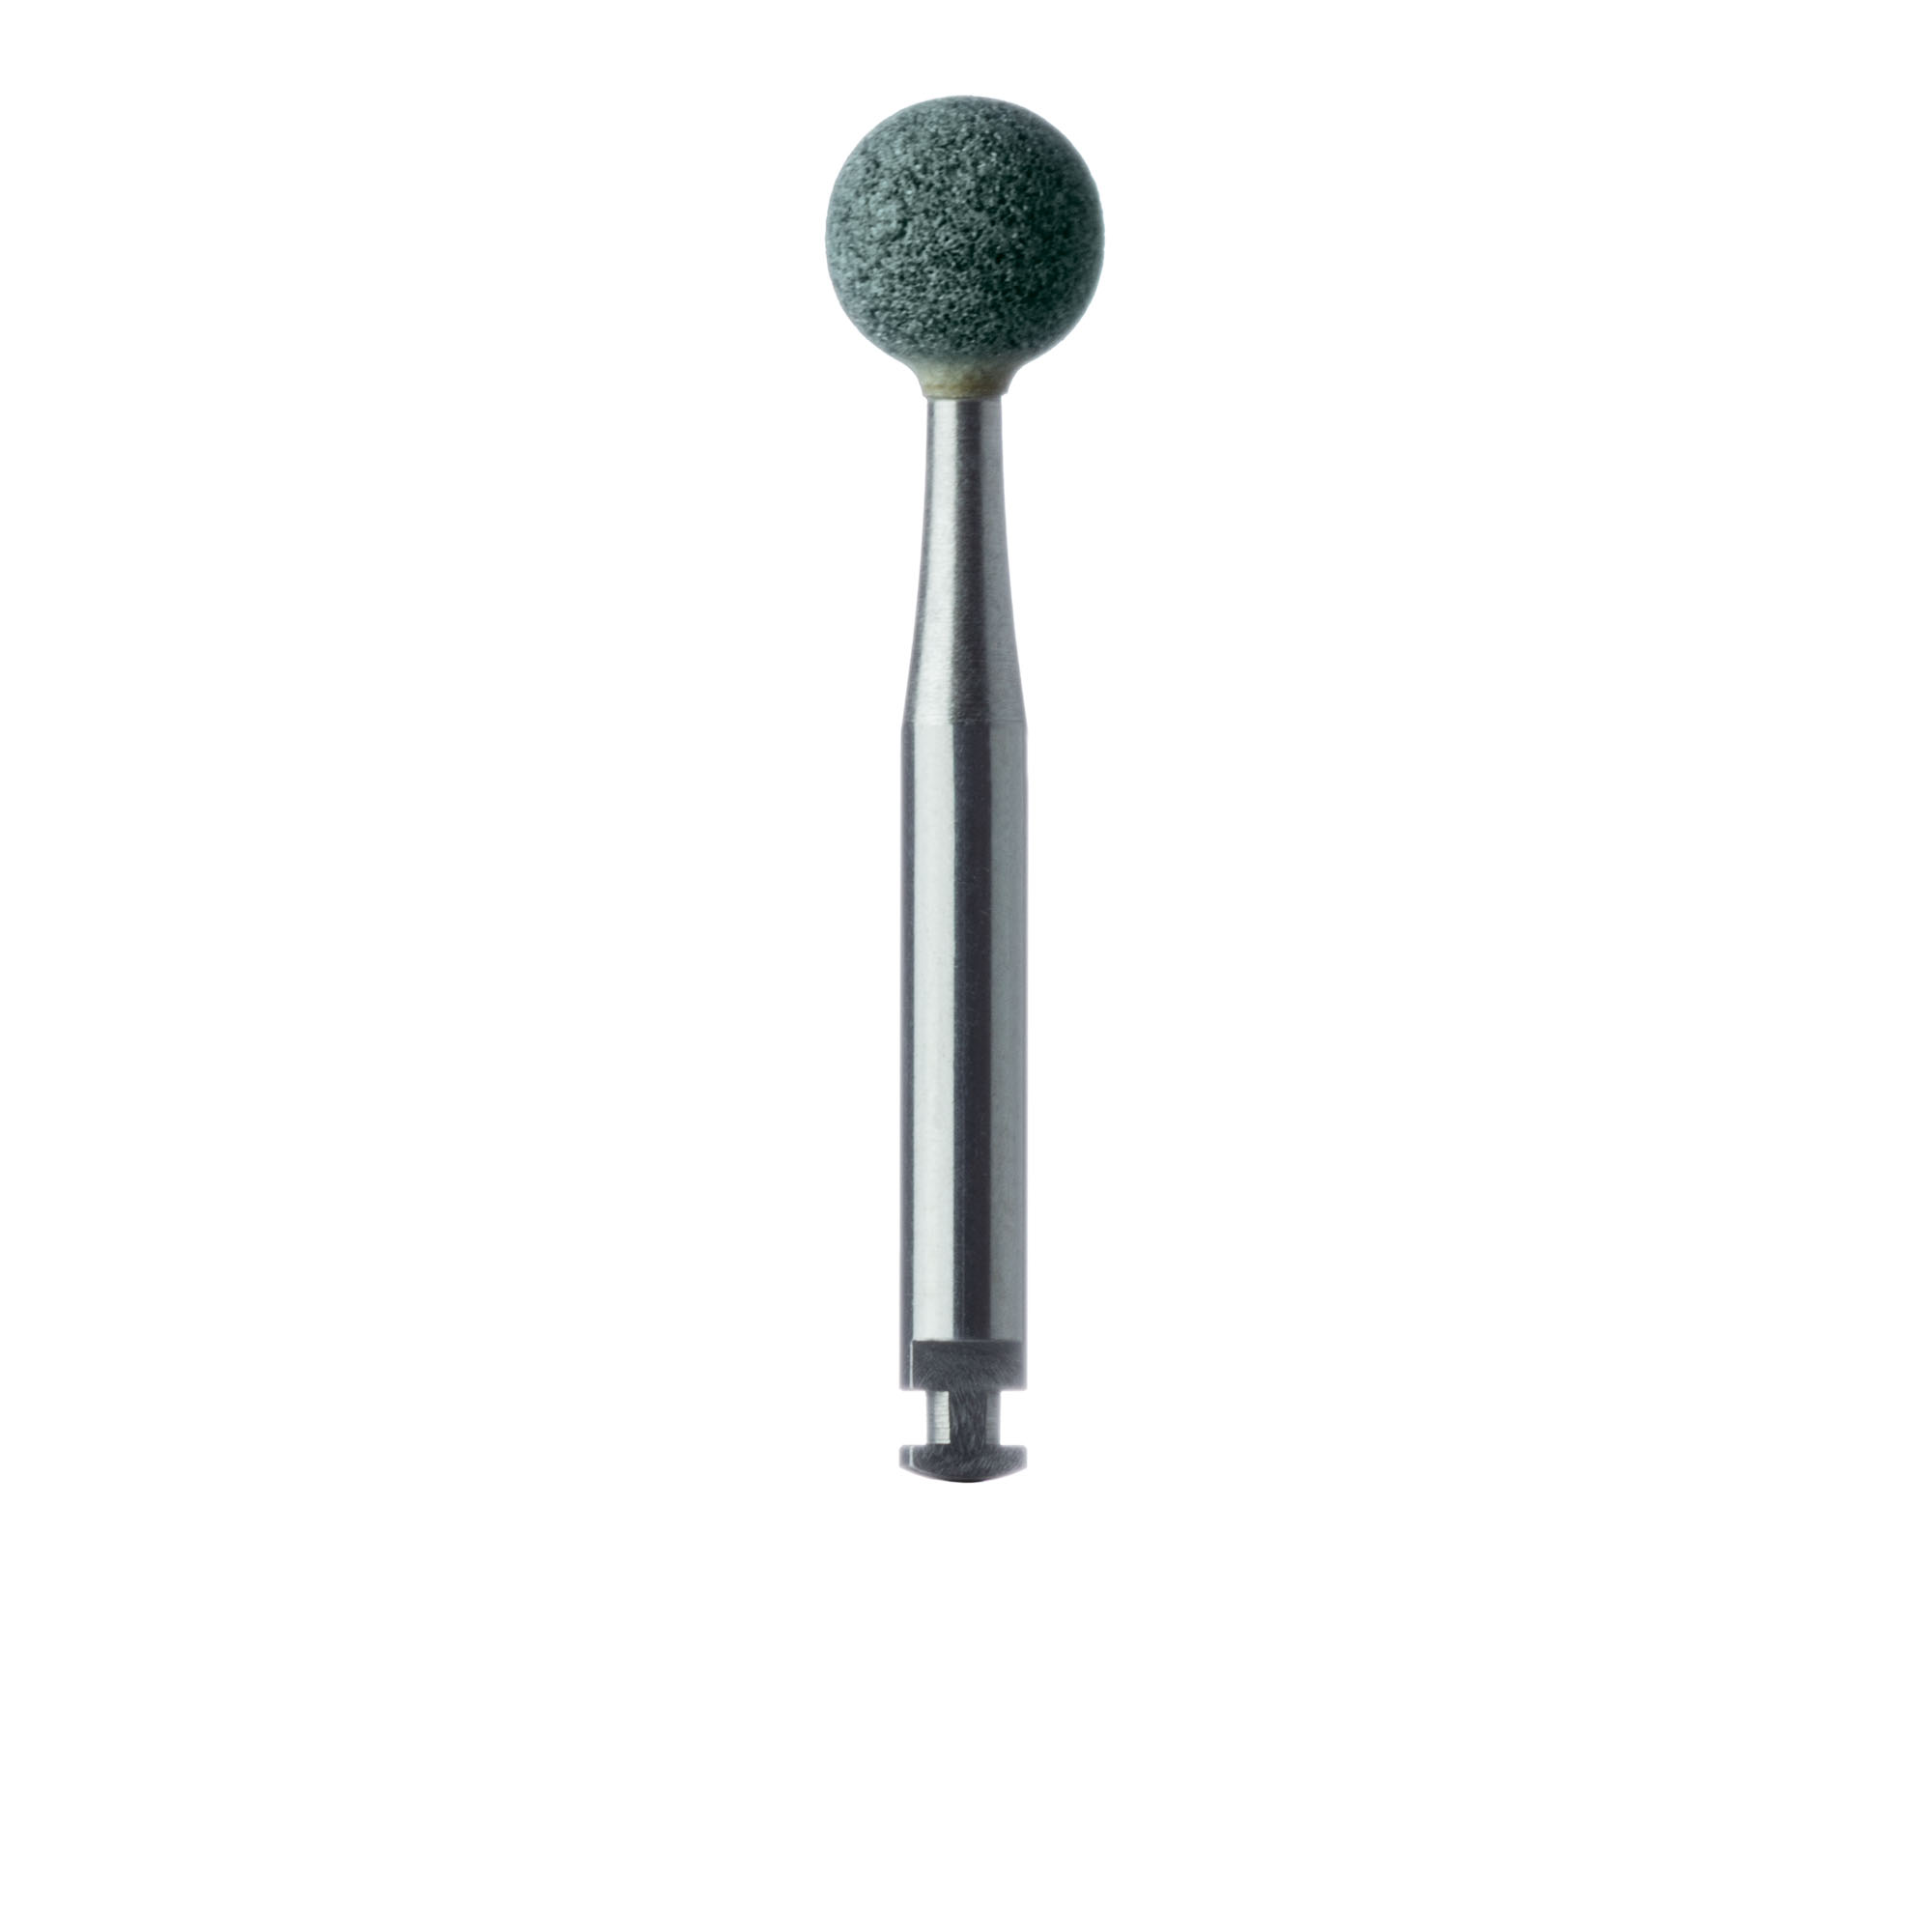 603-050-RA-GRN Abrasive, Green, Medium, 5.0mm, RA